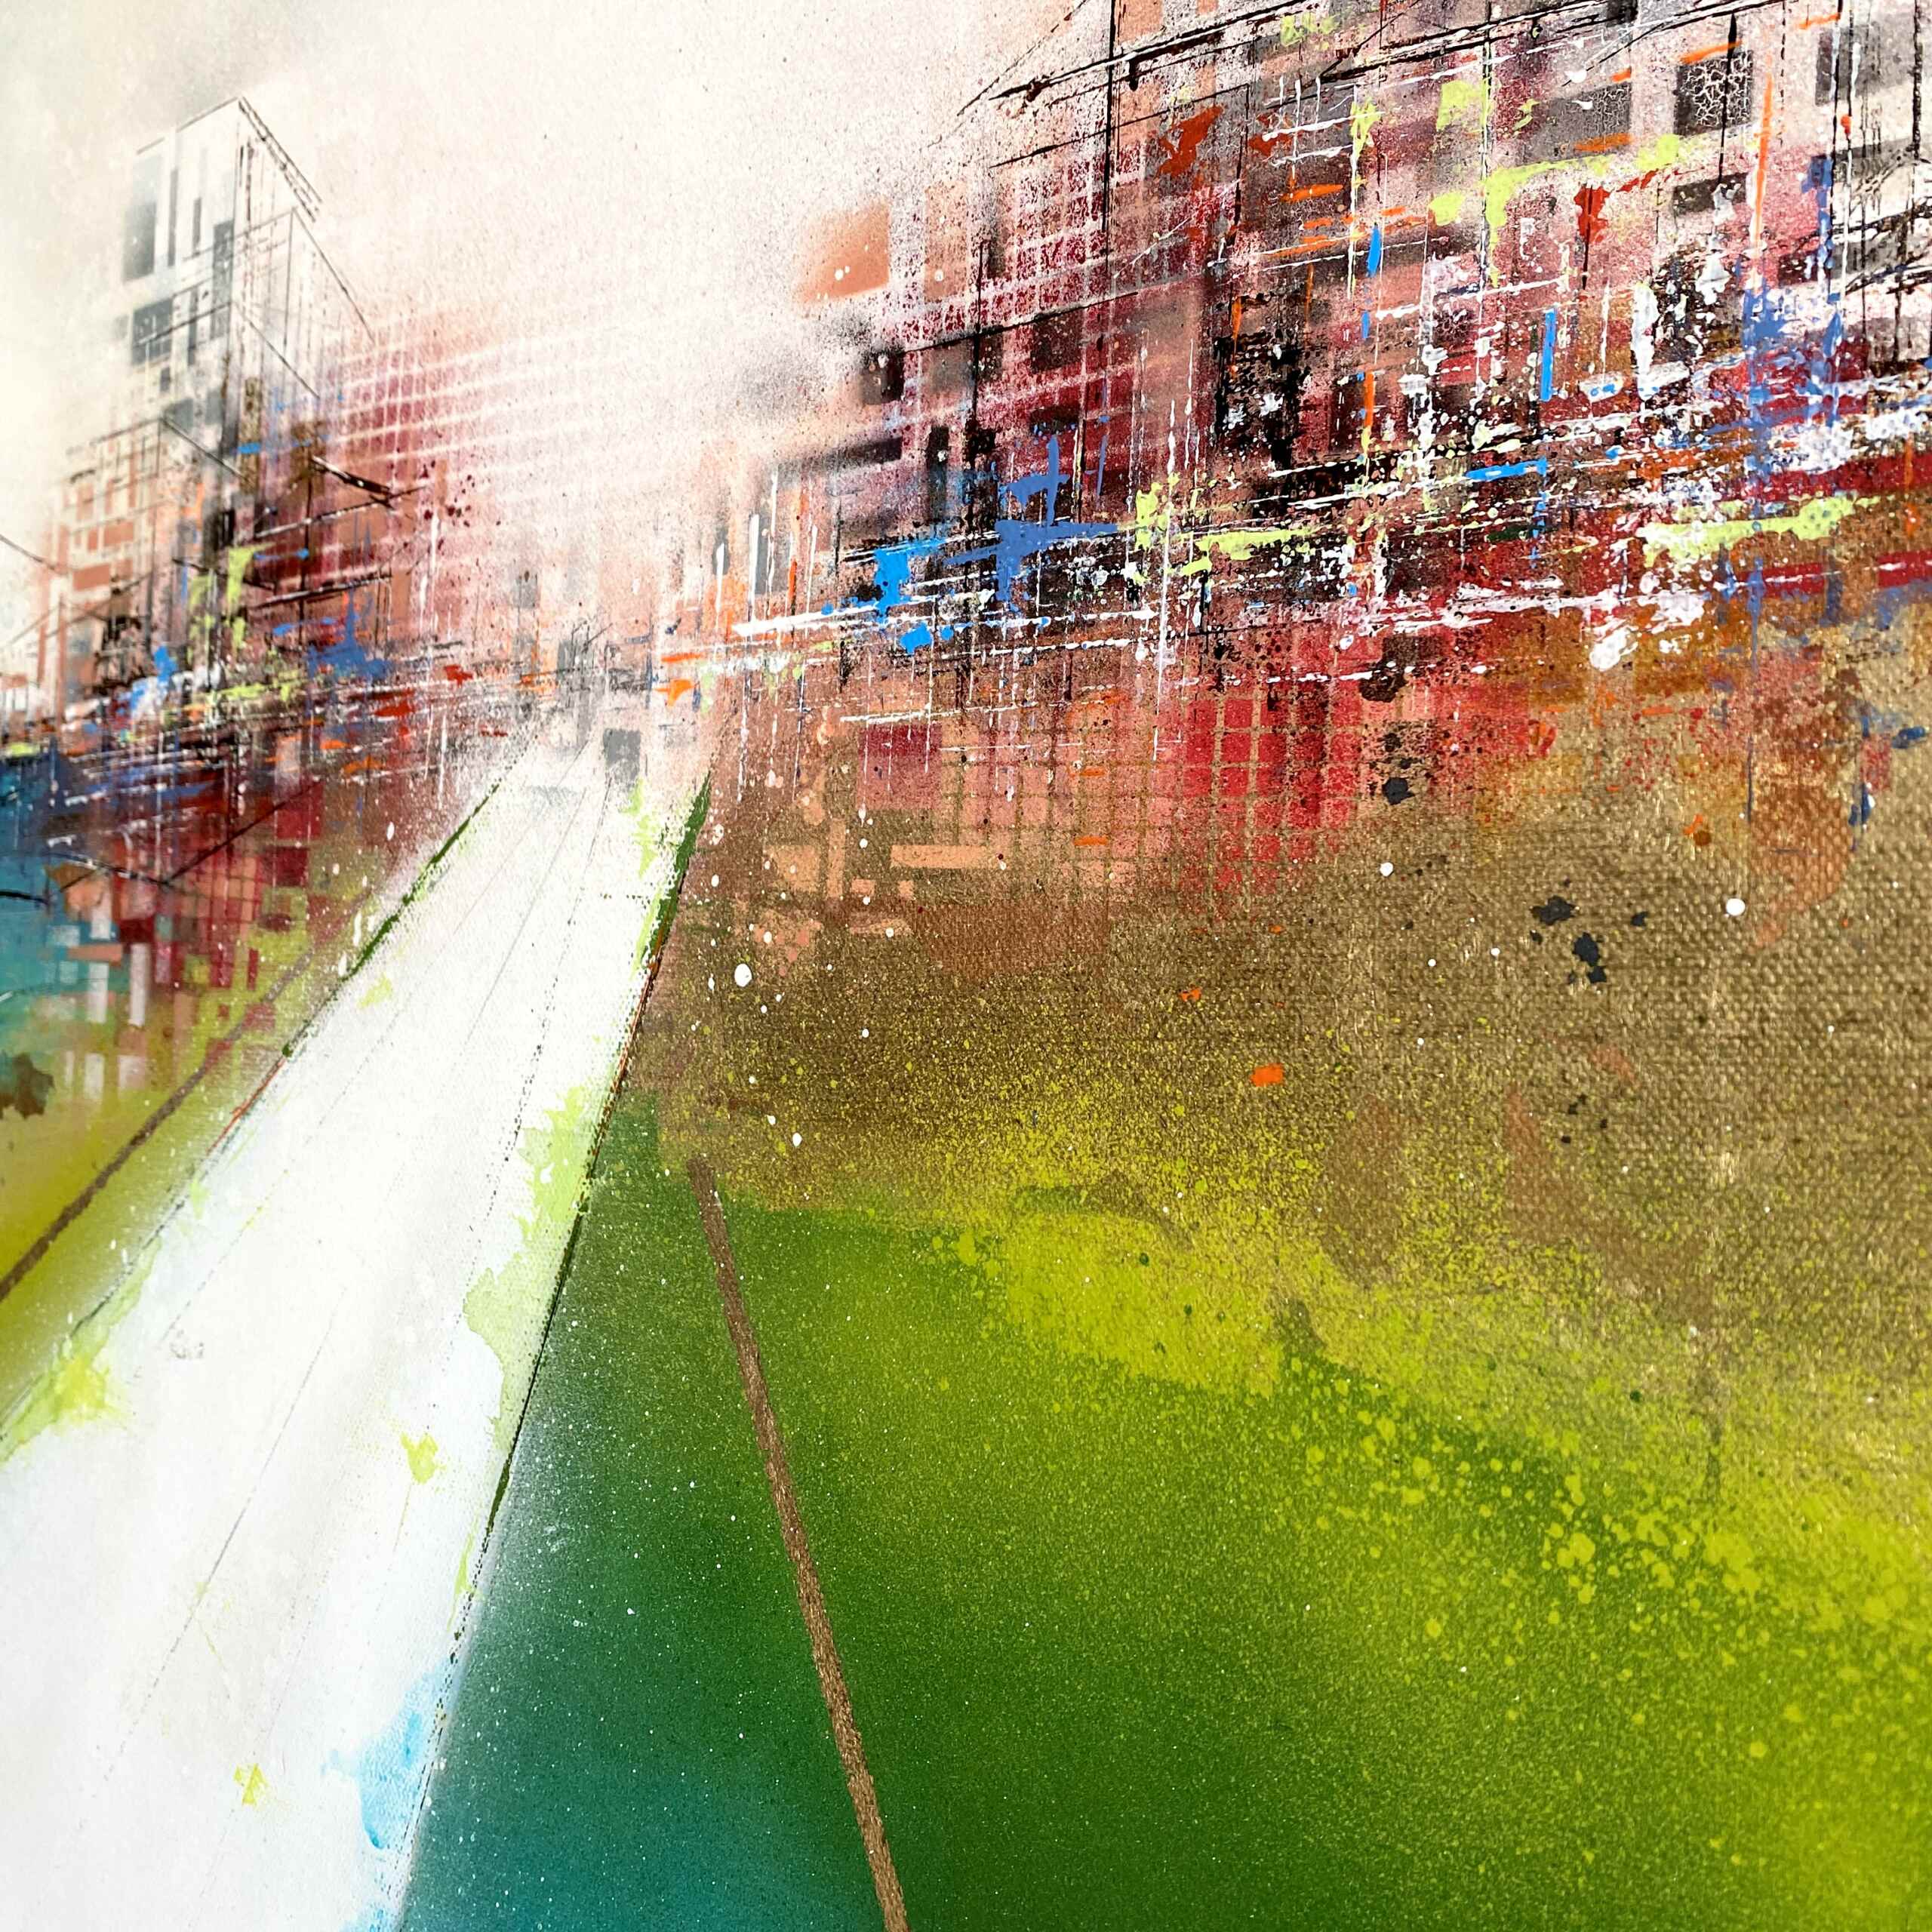 Detail of artwork "City Calling No 1" by Nina Groth